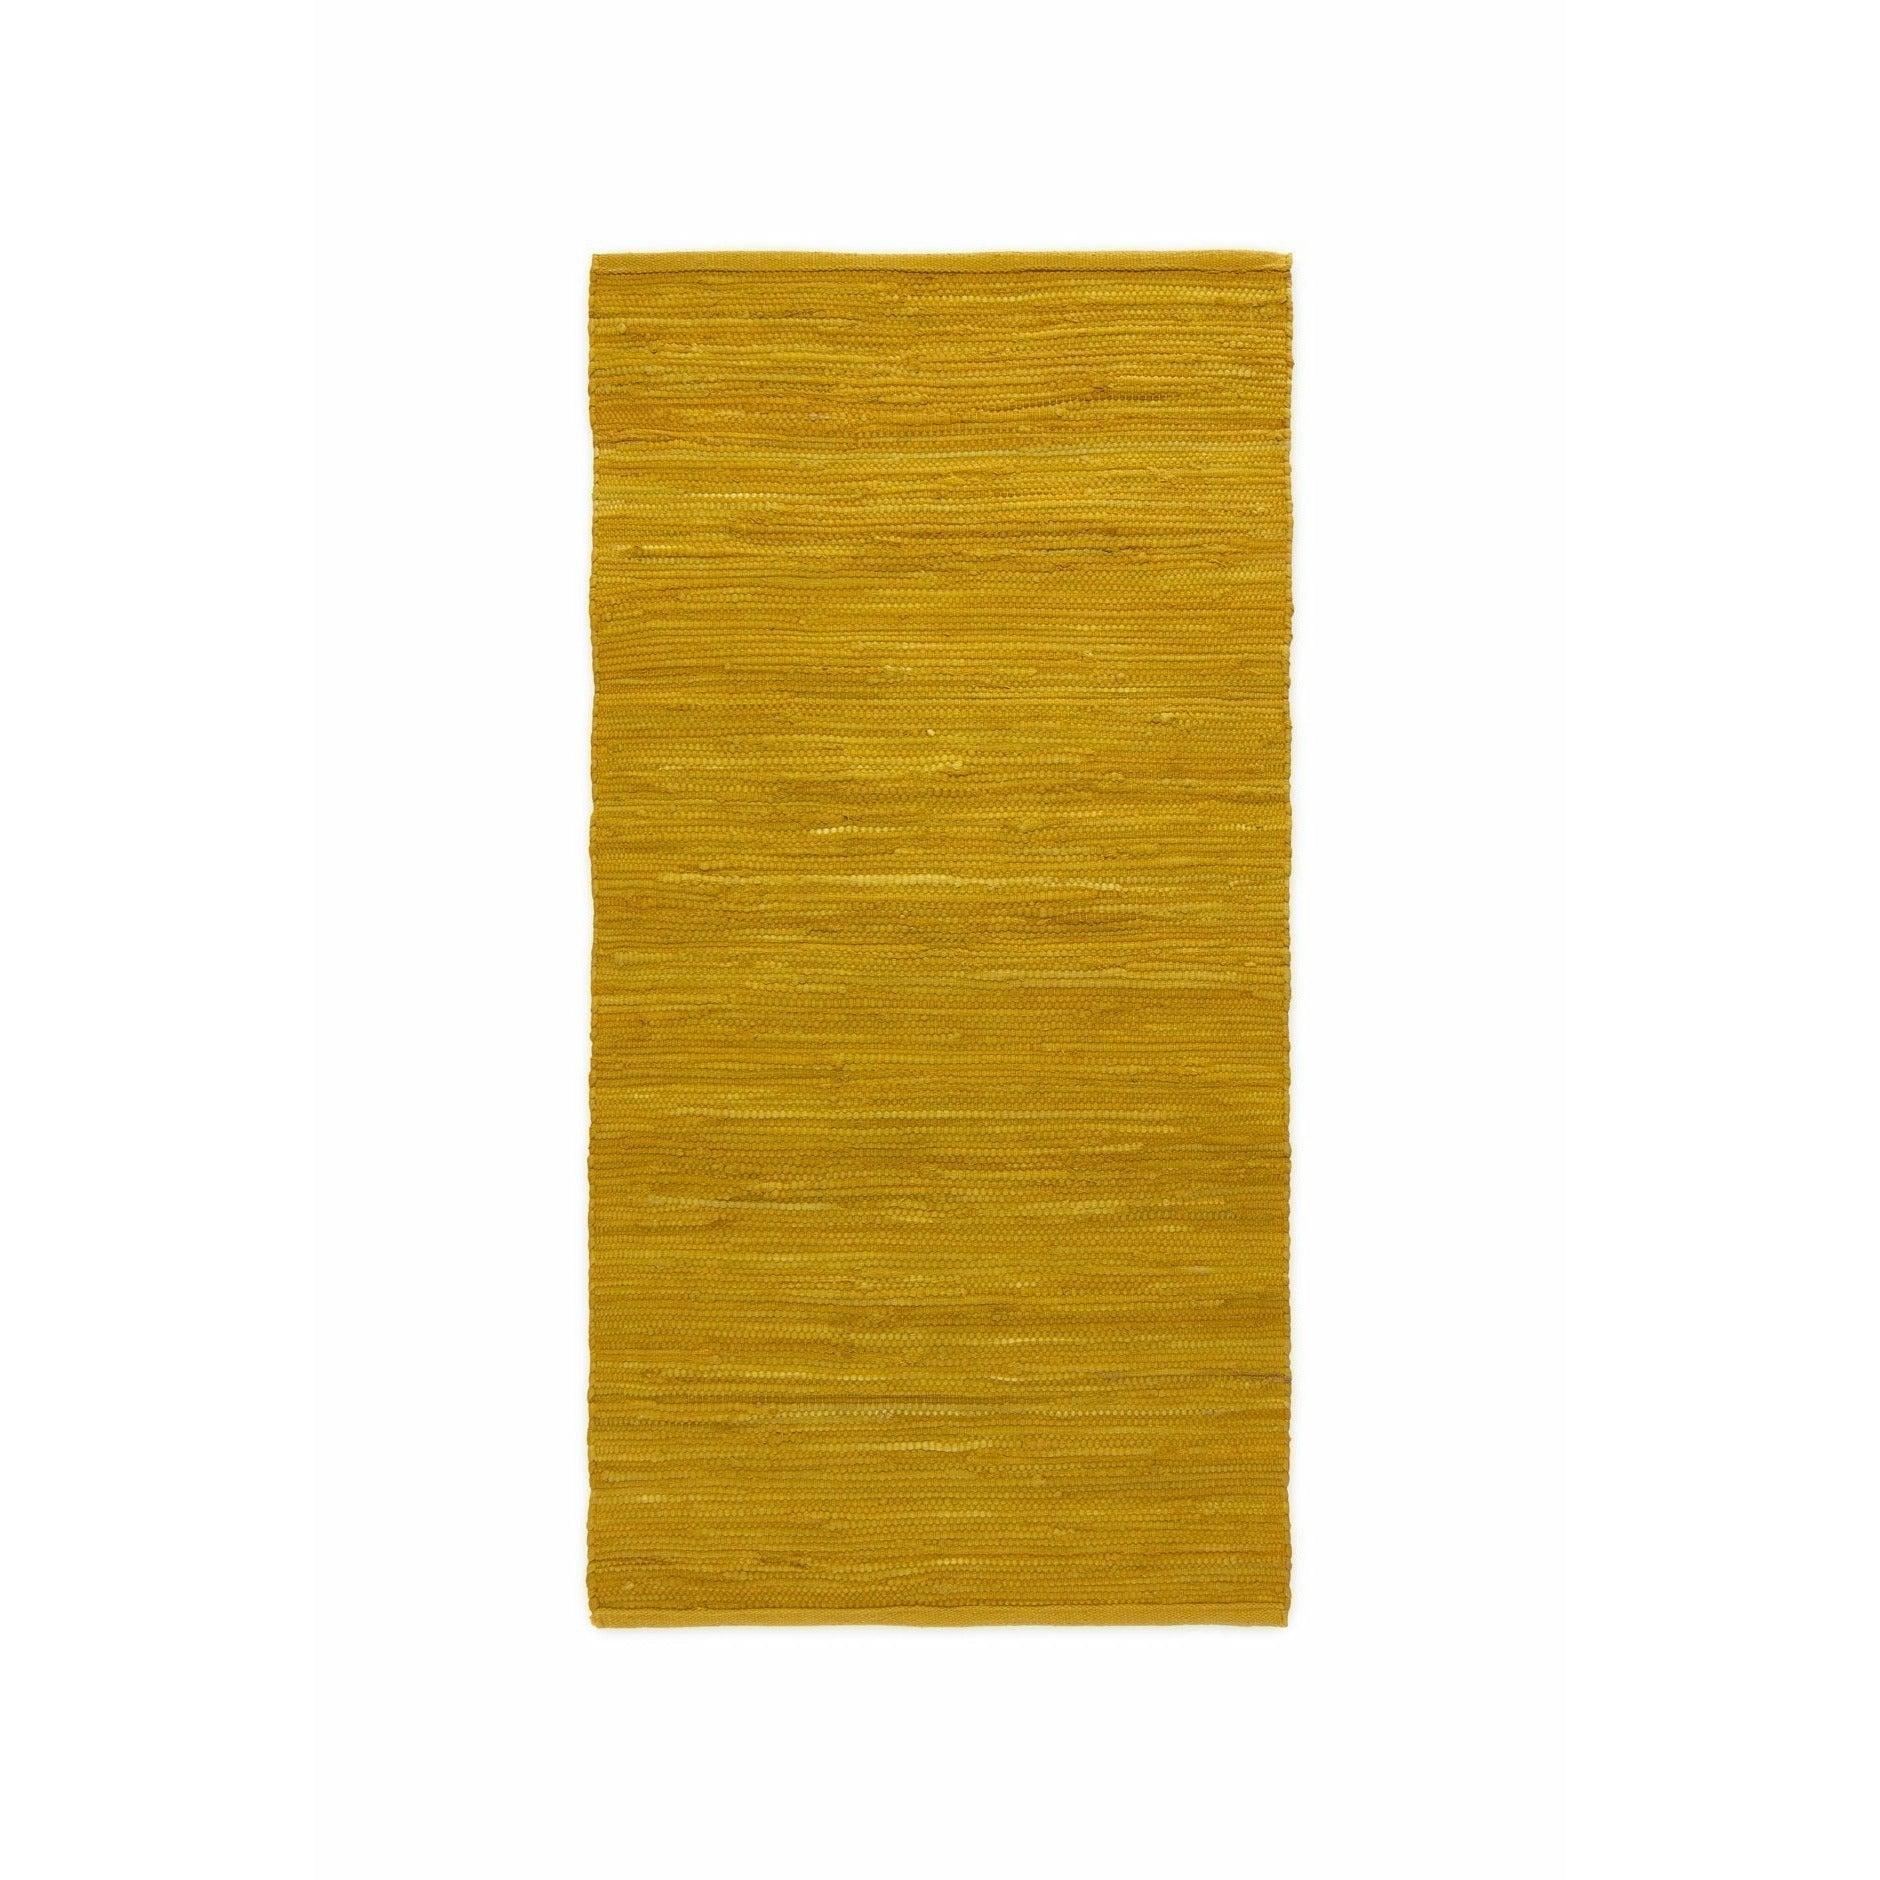 Rug Solid Tapis coton ambre brunis, 60 x 90 cm